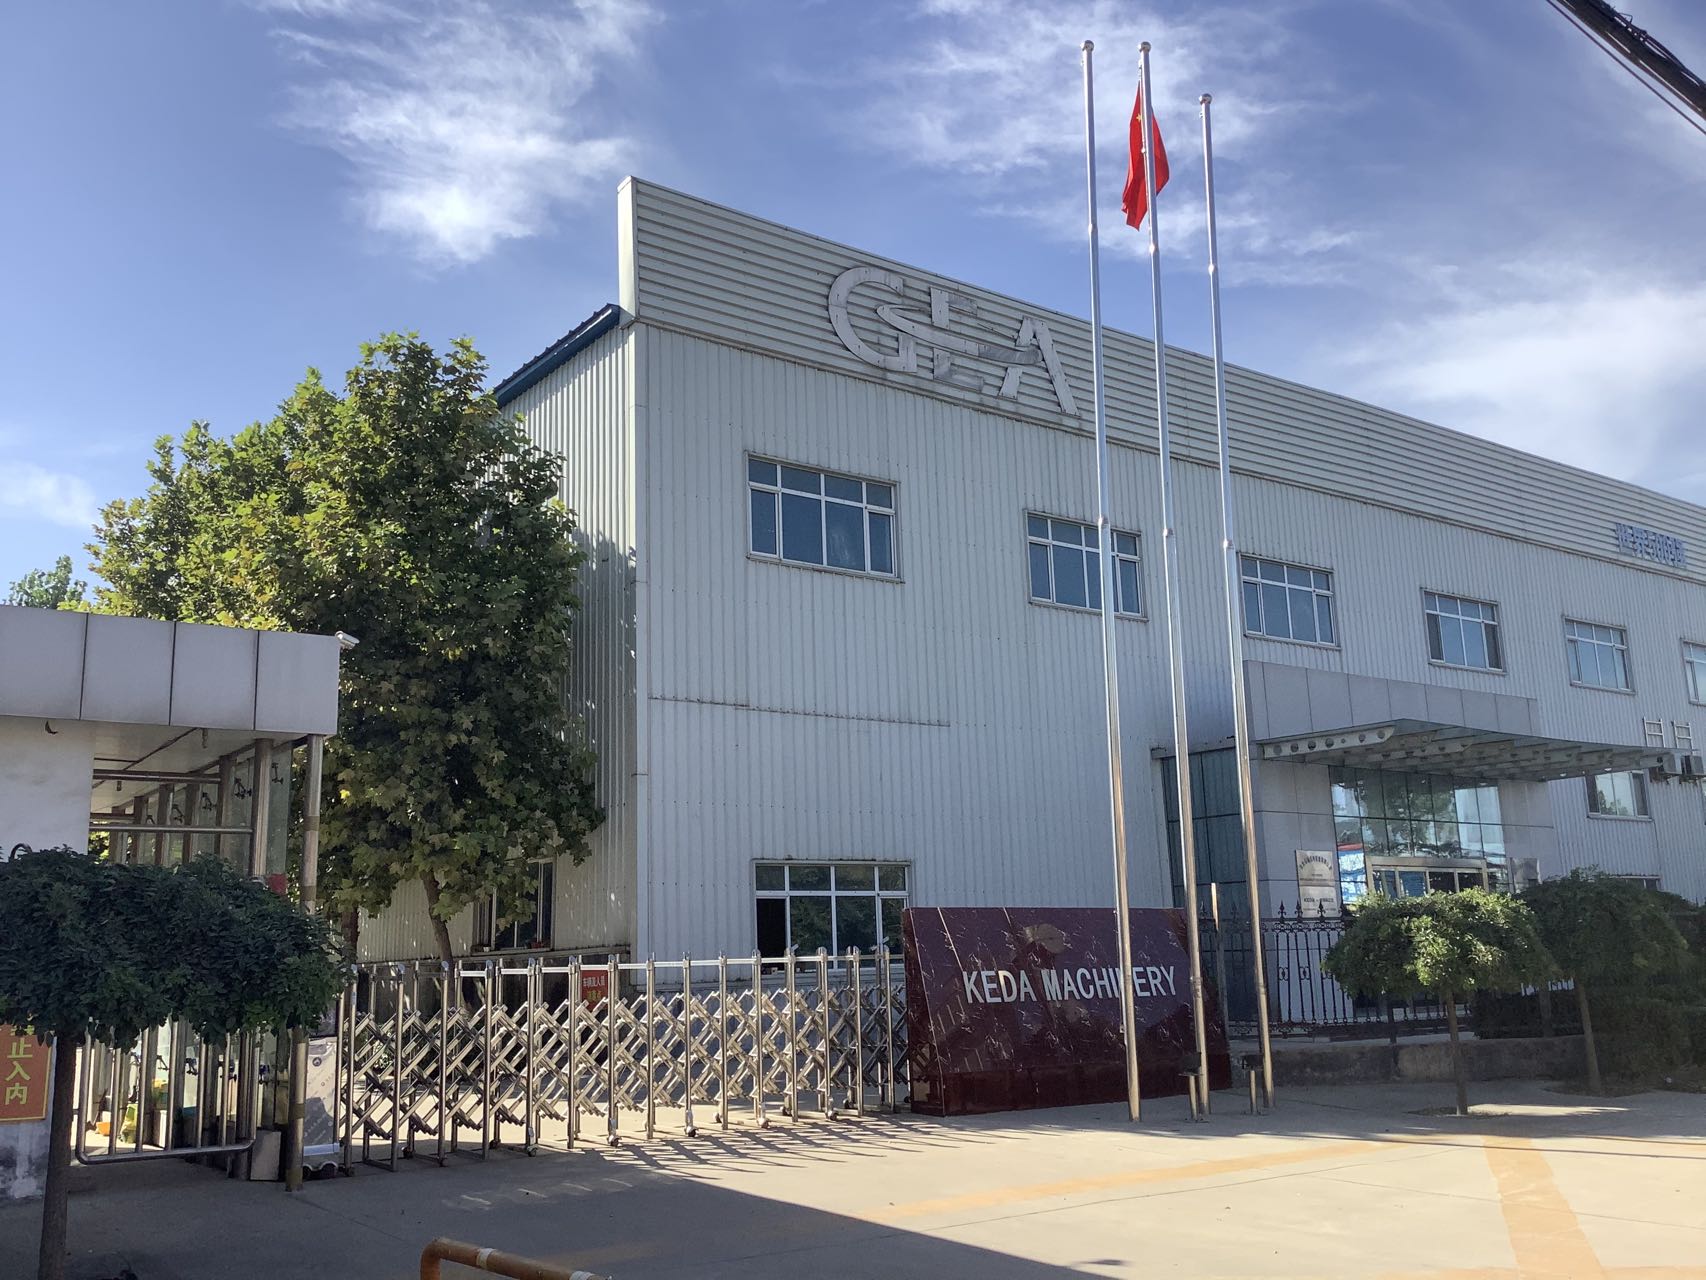 Shijiazhuang Keda Machinery Co., Ltd